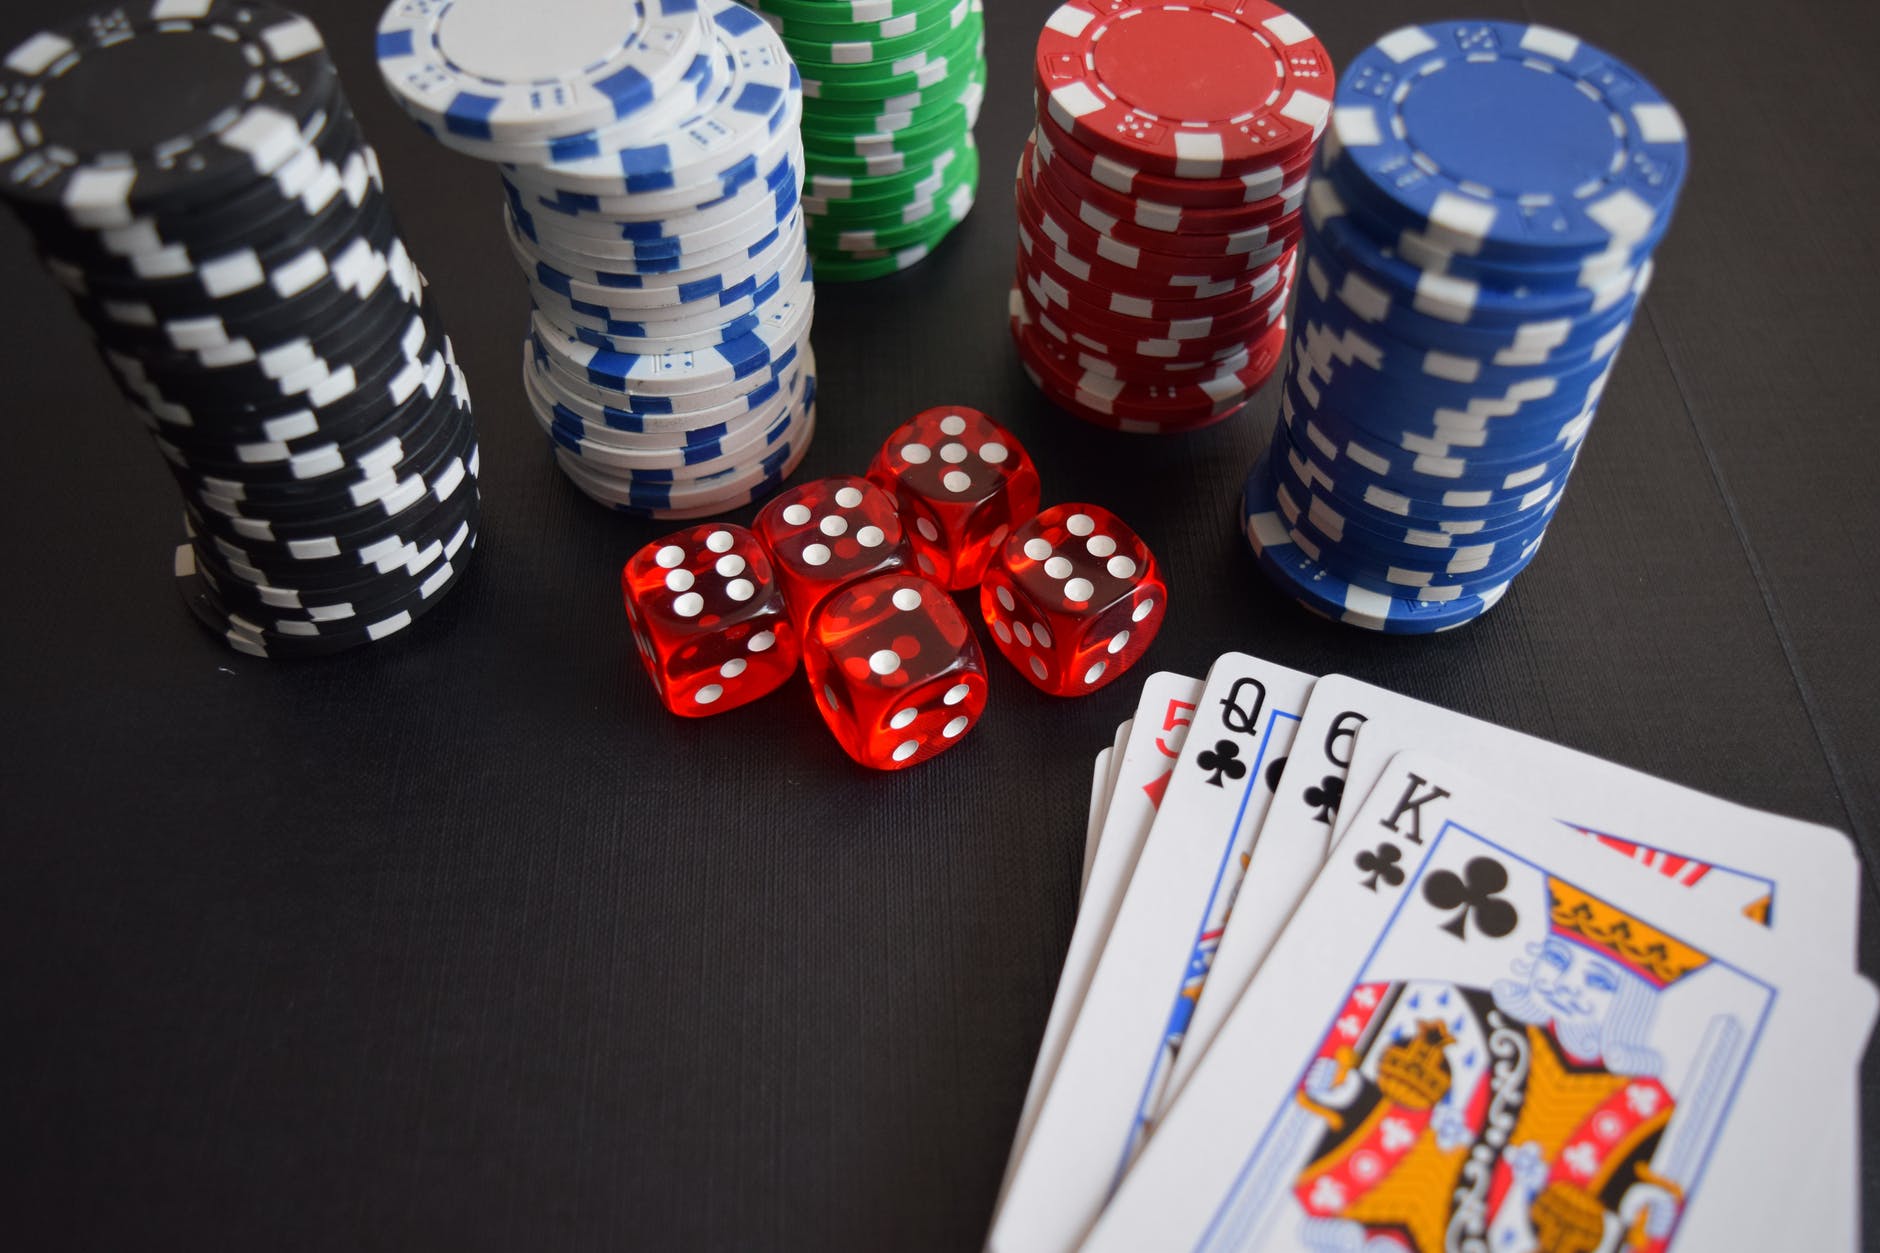 Advantages of Online Casinos vs. Land-Based Casinos